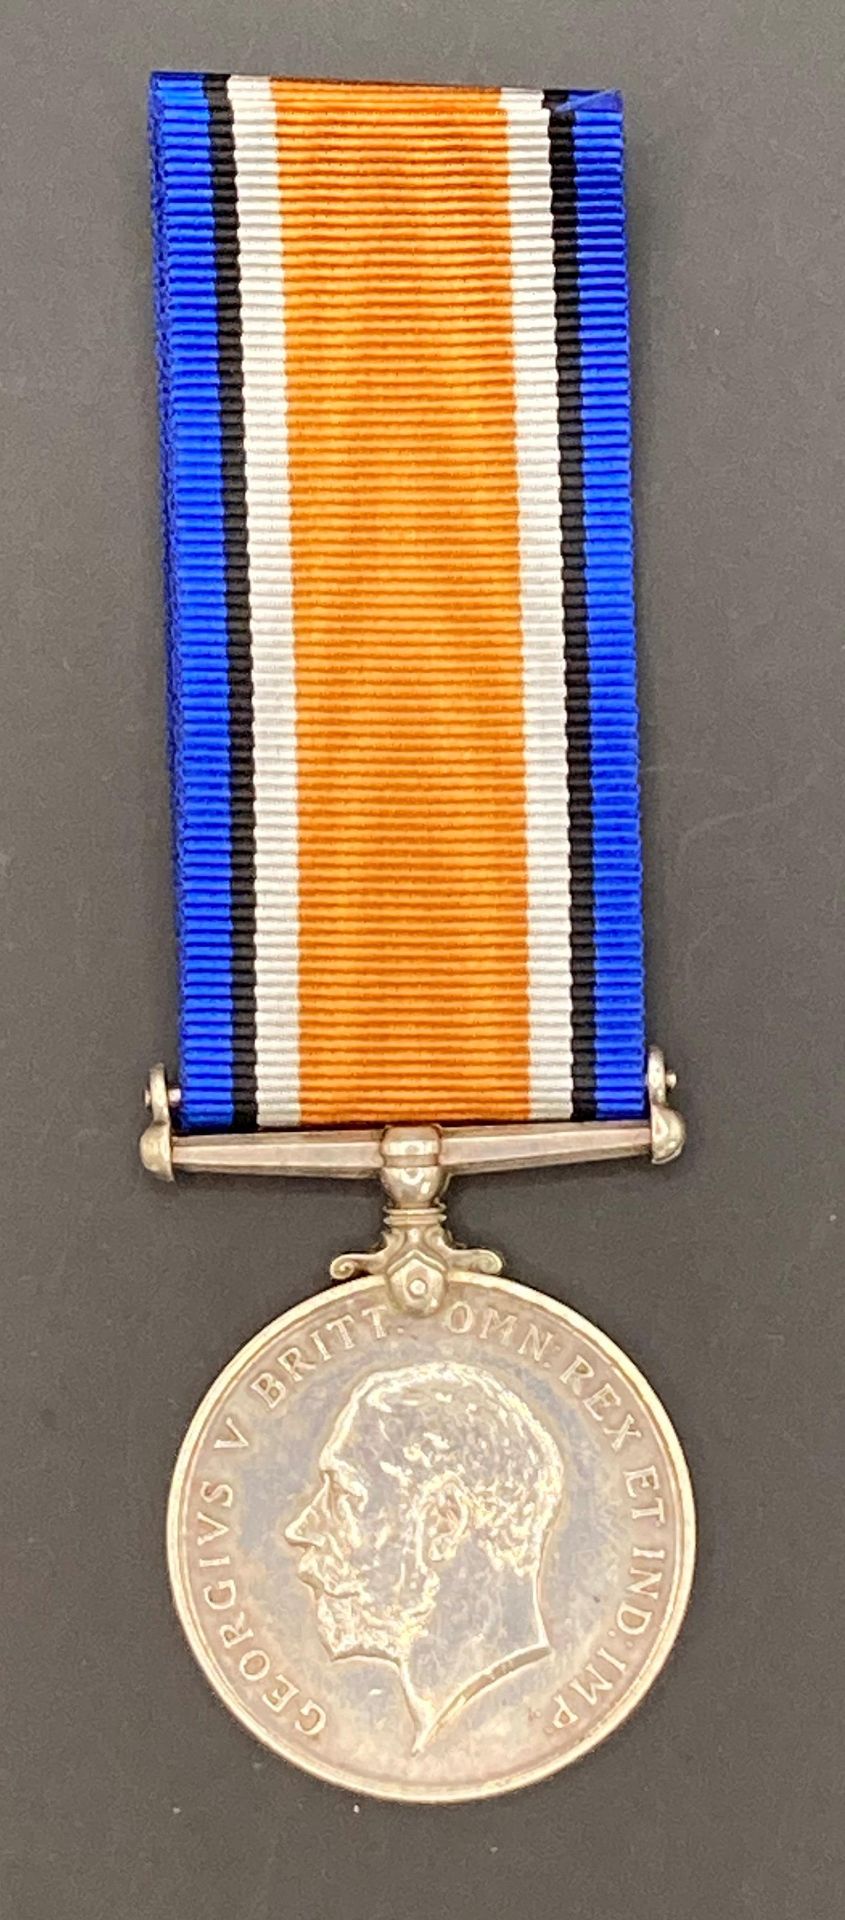 World War I War Medal with ribbons to 1987 Pte F P Jowett RAMC Frank Patrick Jowett served in the